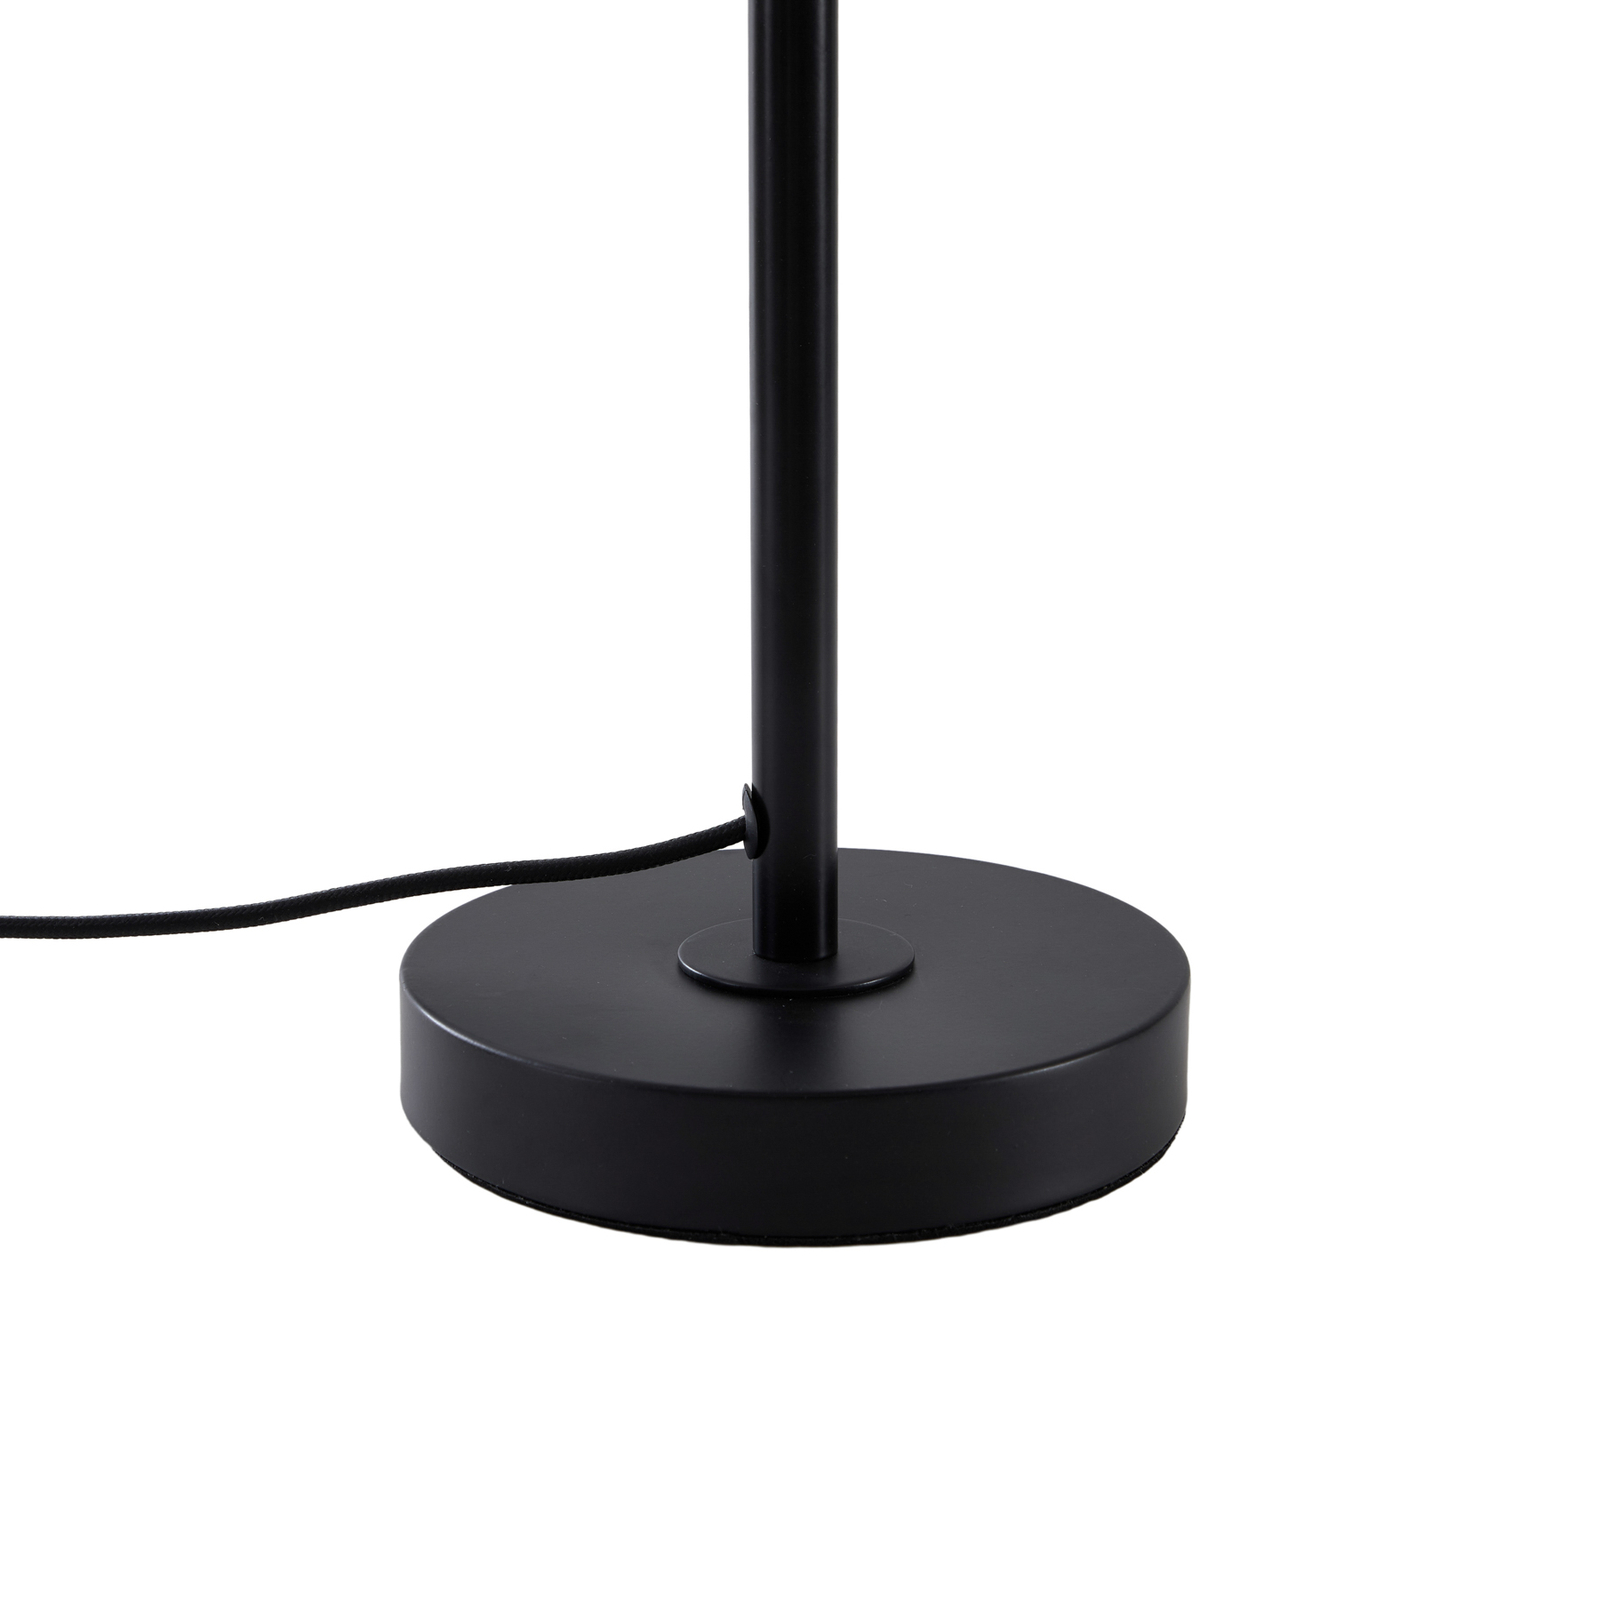 Lindby table lamp Nerys, black, bamboo, Ø 28 cm